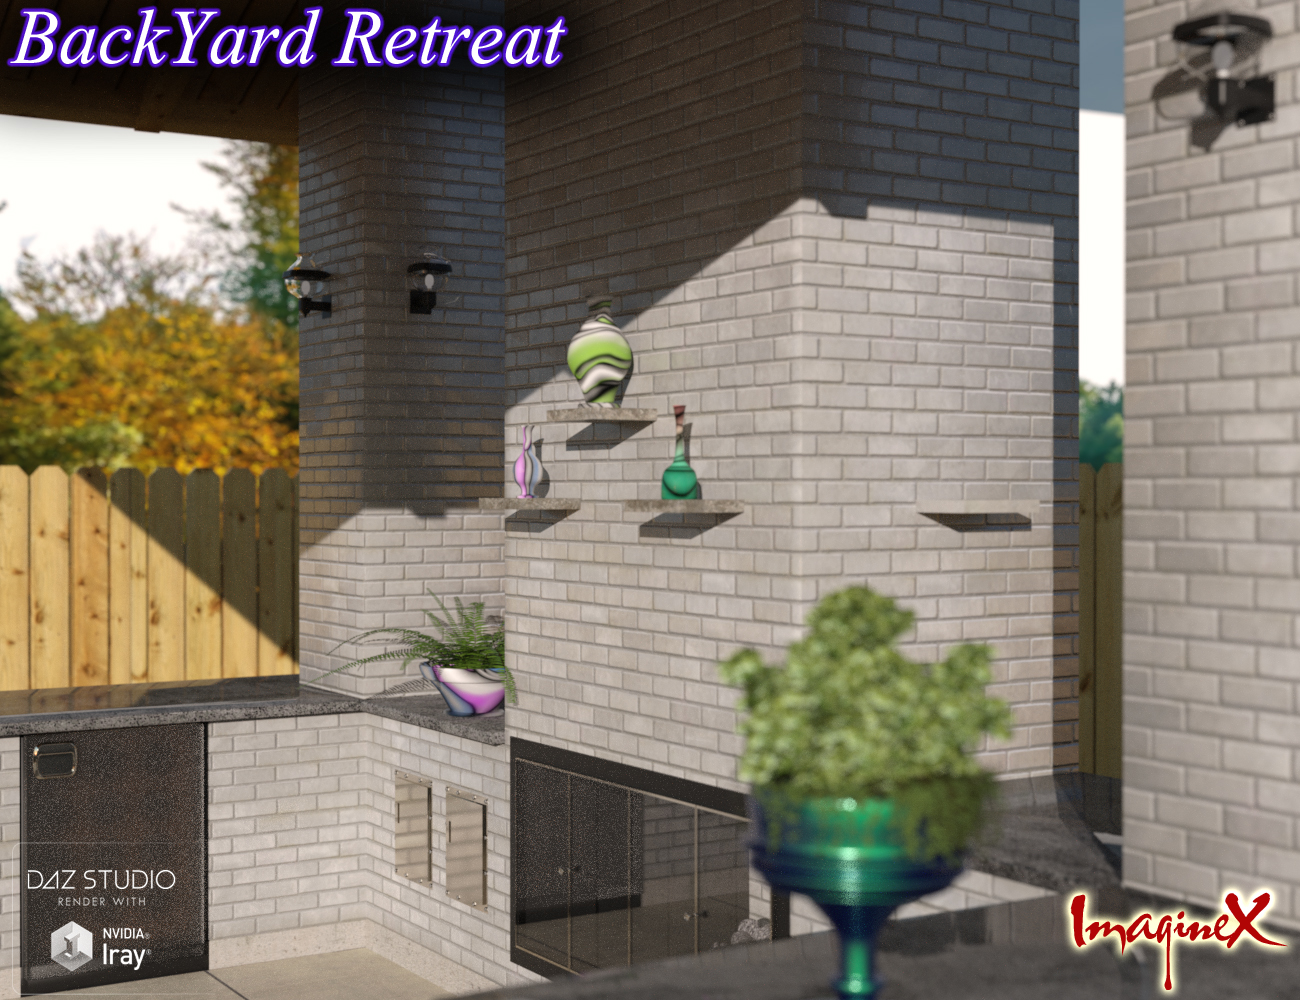 BackYard Retreat by: ImagineX, 3D Models by Daz 3D